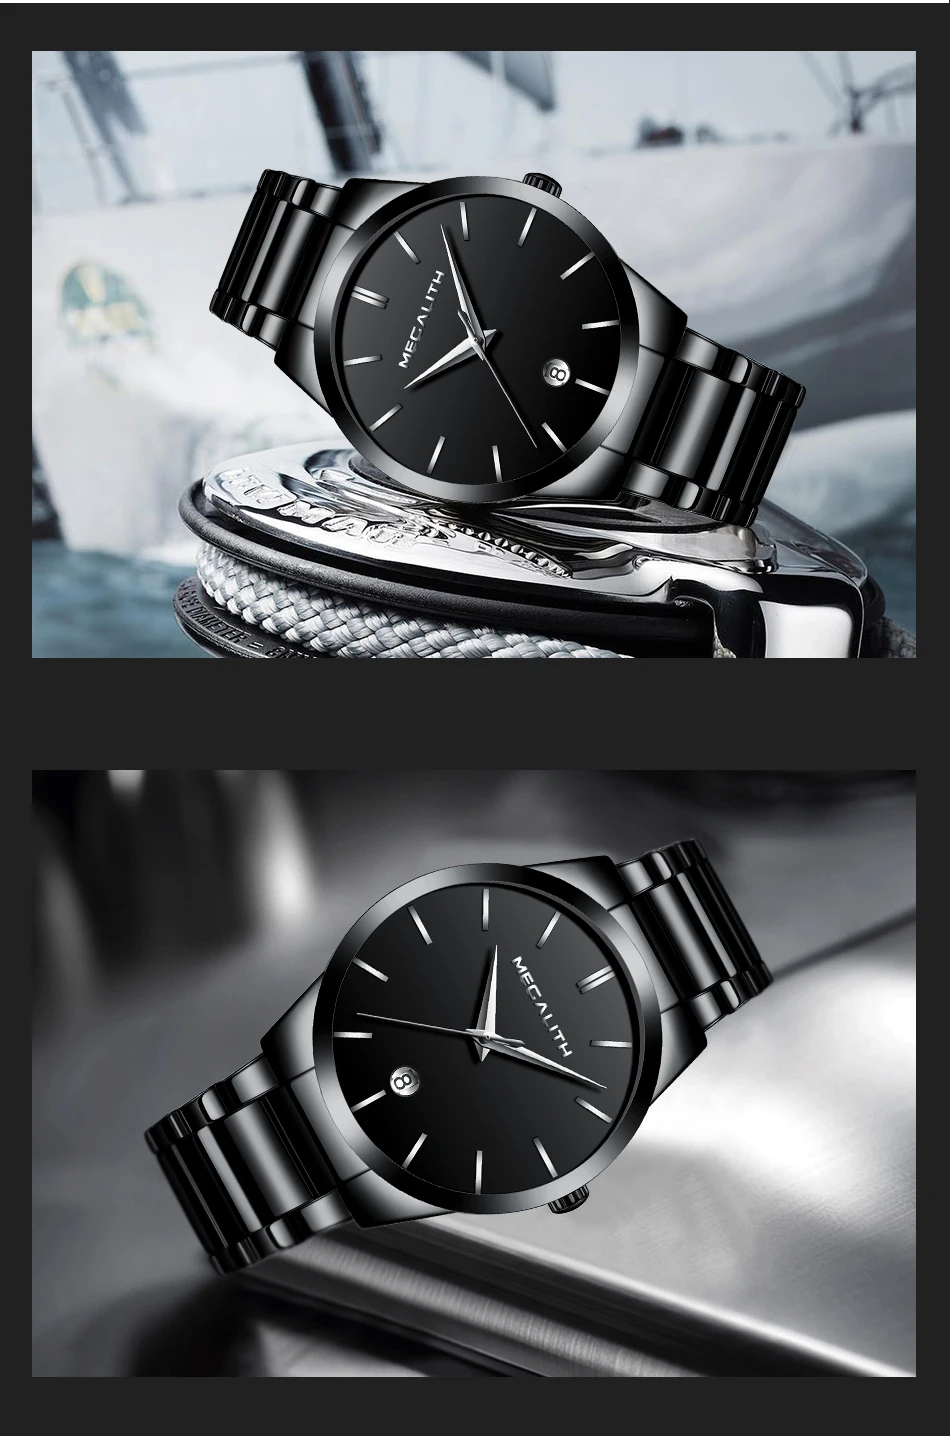 MEGALITH мужские s часы Топ бренд класса люкс милитари спортивные кварцевые часы для мужчин водонепроницаемые мужские спортивные наручные часы Relogio Masculino